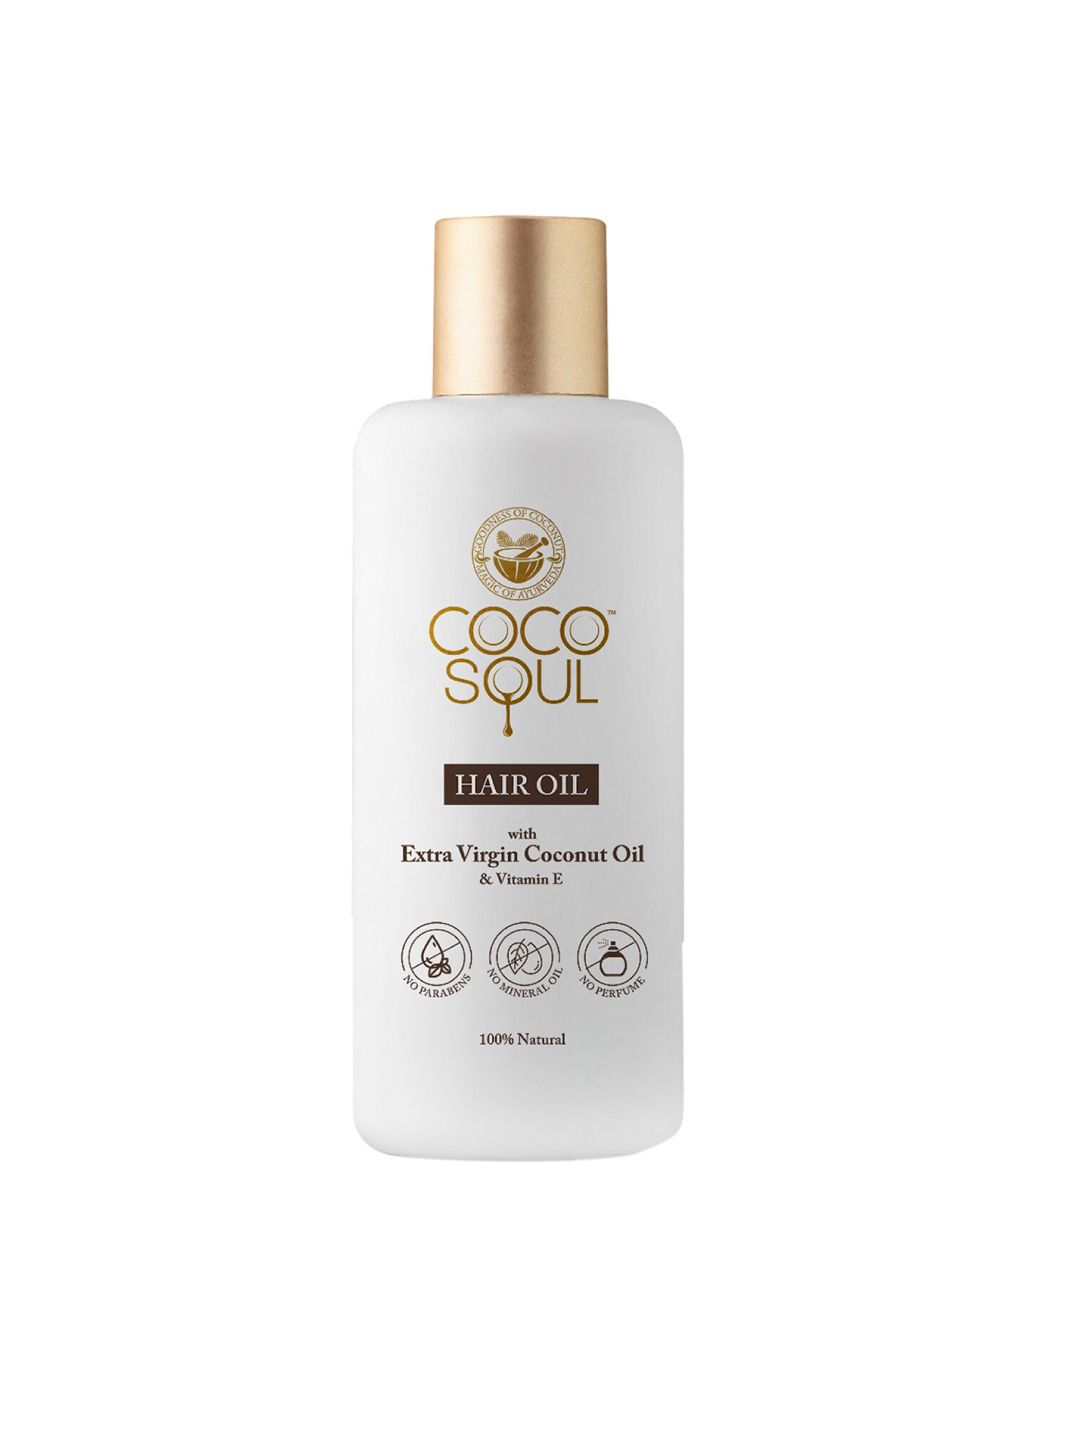 Coco Soul Hair Oil with Extra Virgin Coconut Oil & Vitamin E For Deep Nourishment 200ml Price in India